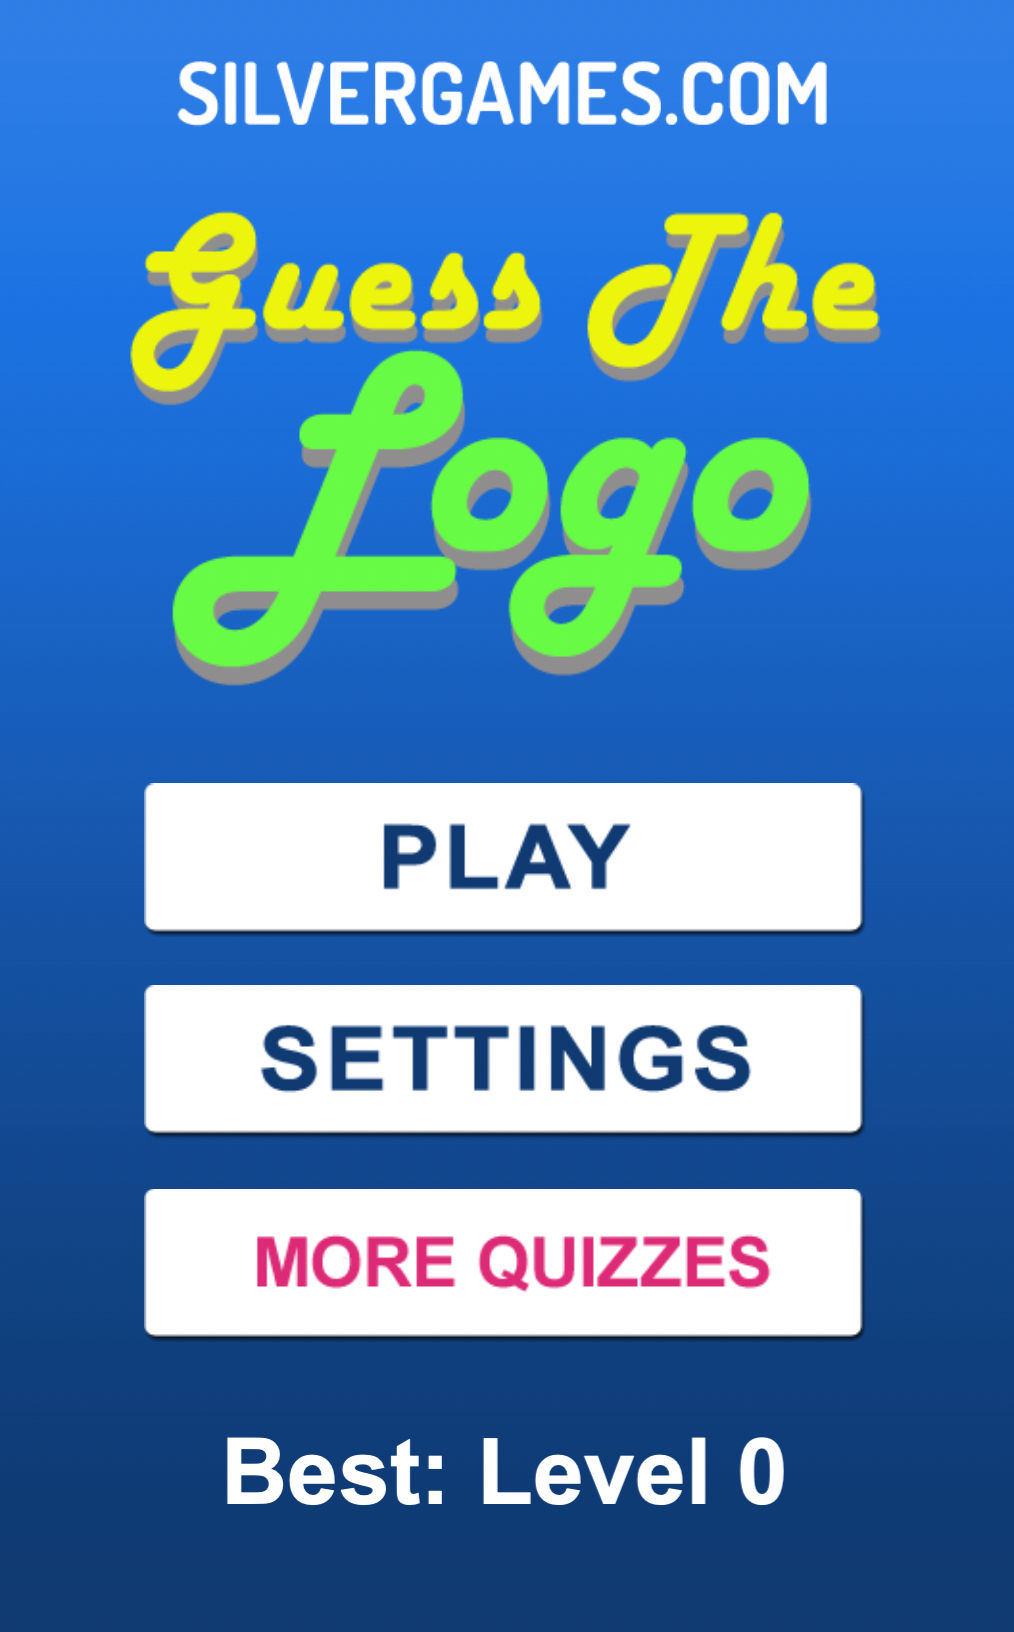 Free: Logo Quiz Answers Quiz: Logo game Logo Quiz Malaysia - level 